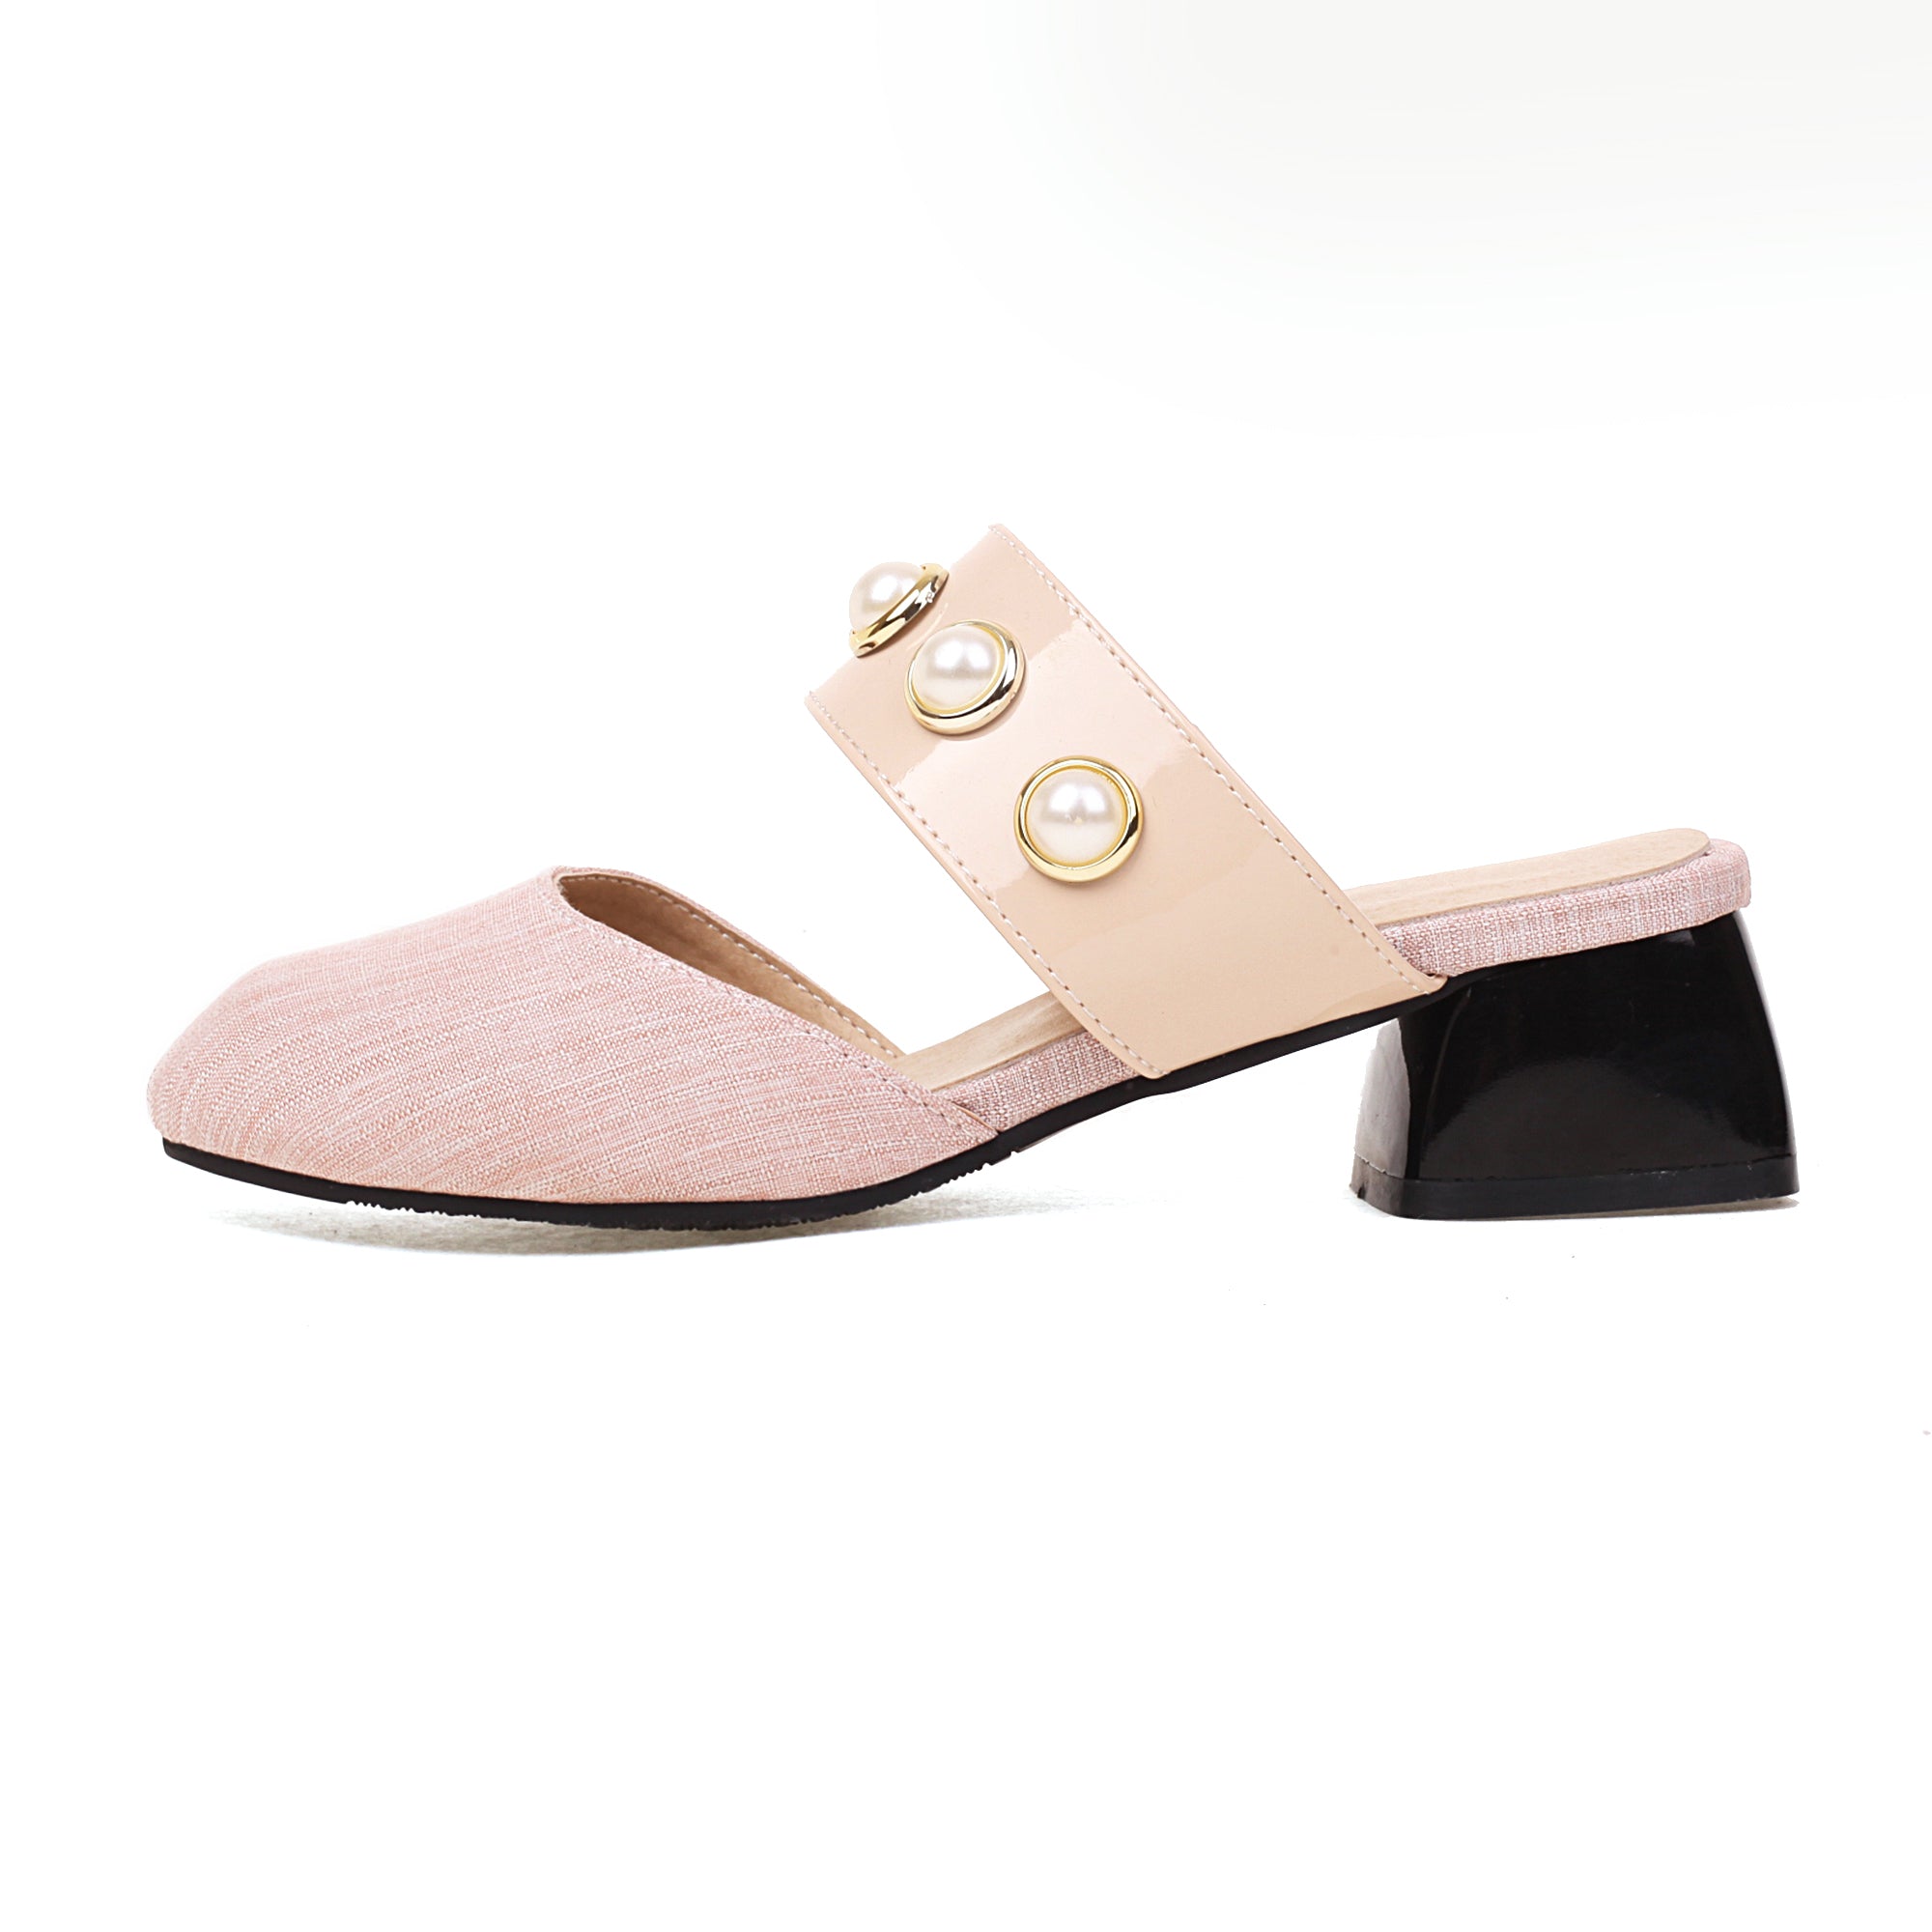 Bigsizeheels Houndstooth Pearl Round Toe Flats Sandals - Pink best oversized womens heels are from bigsizeheels®